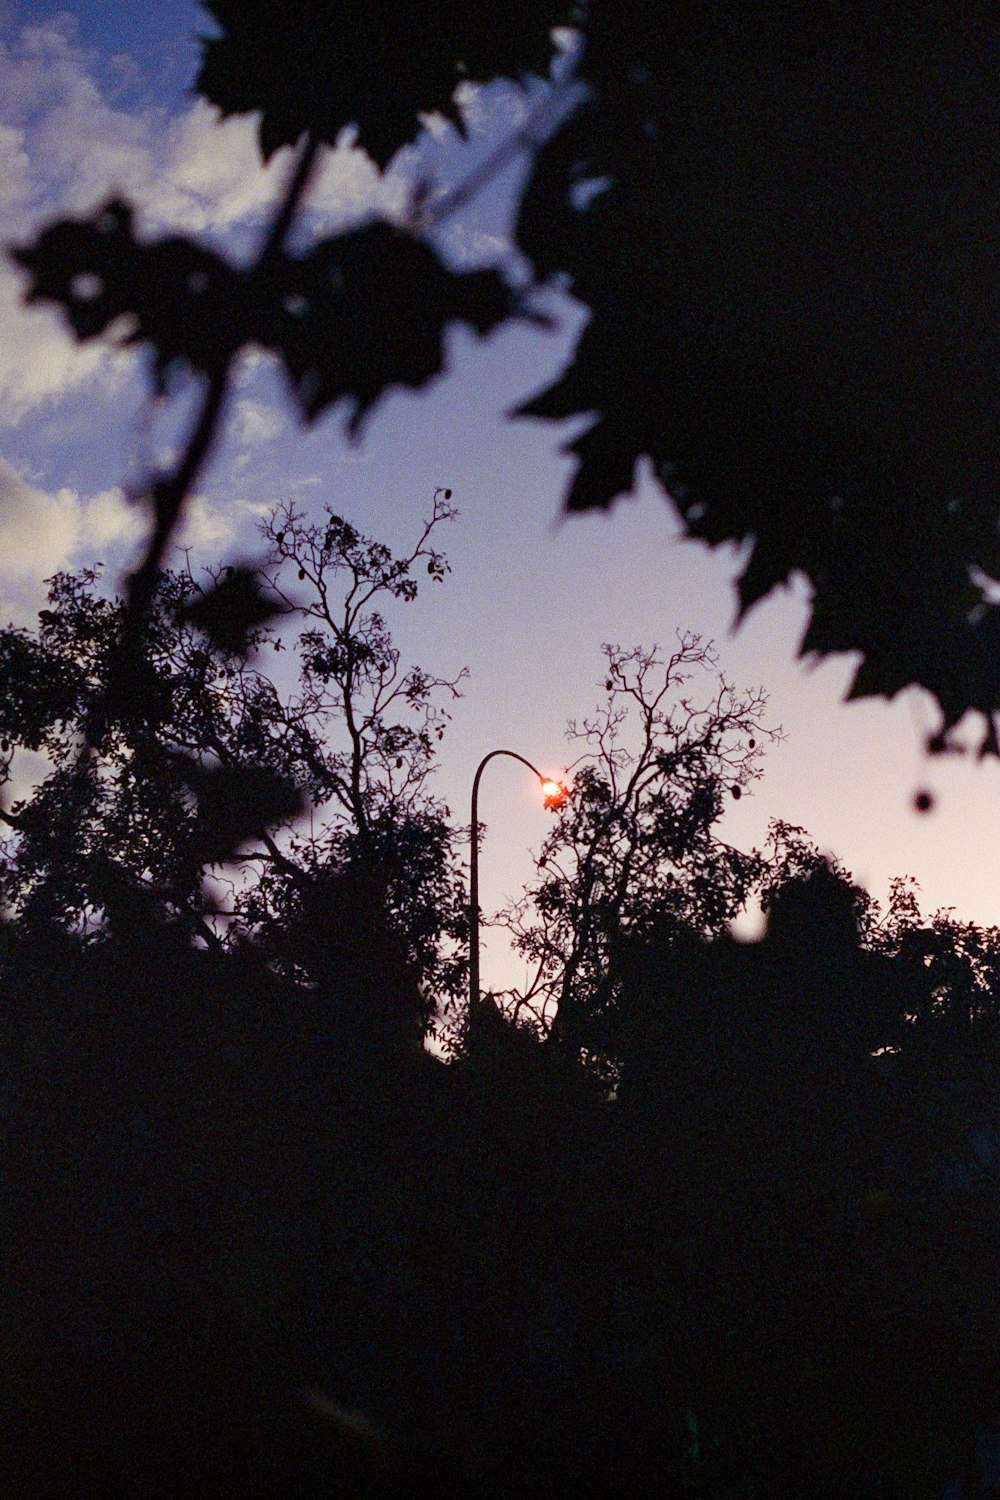 a street light is seen through the trees